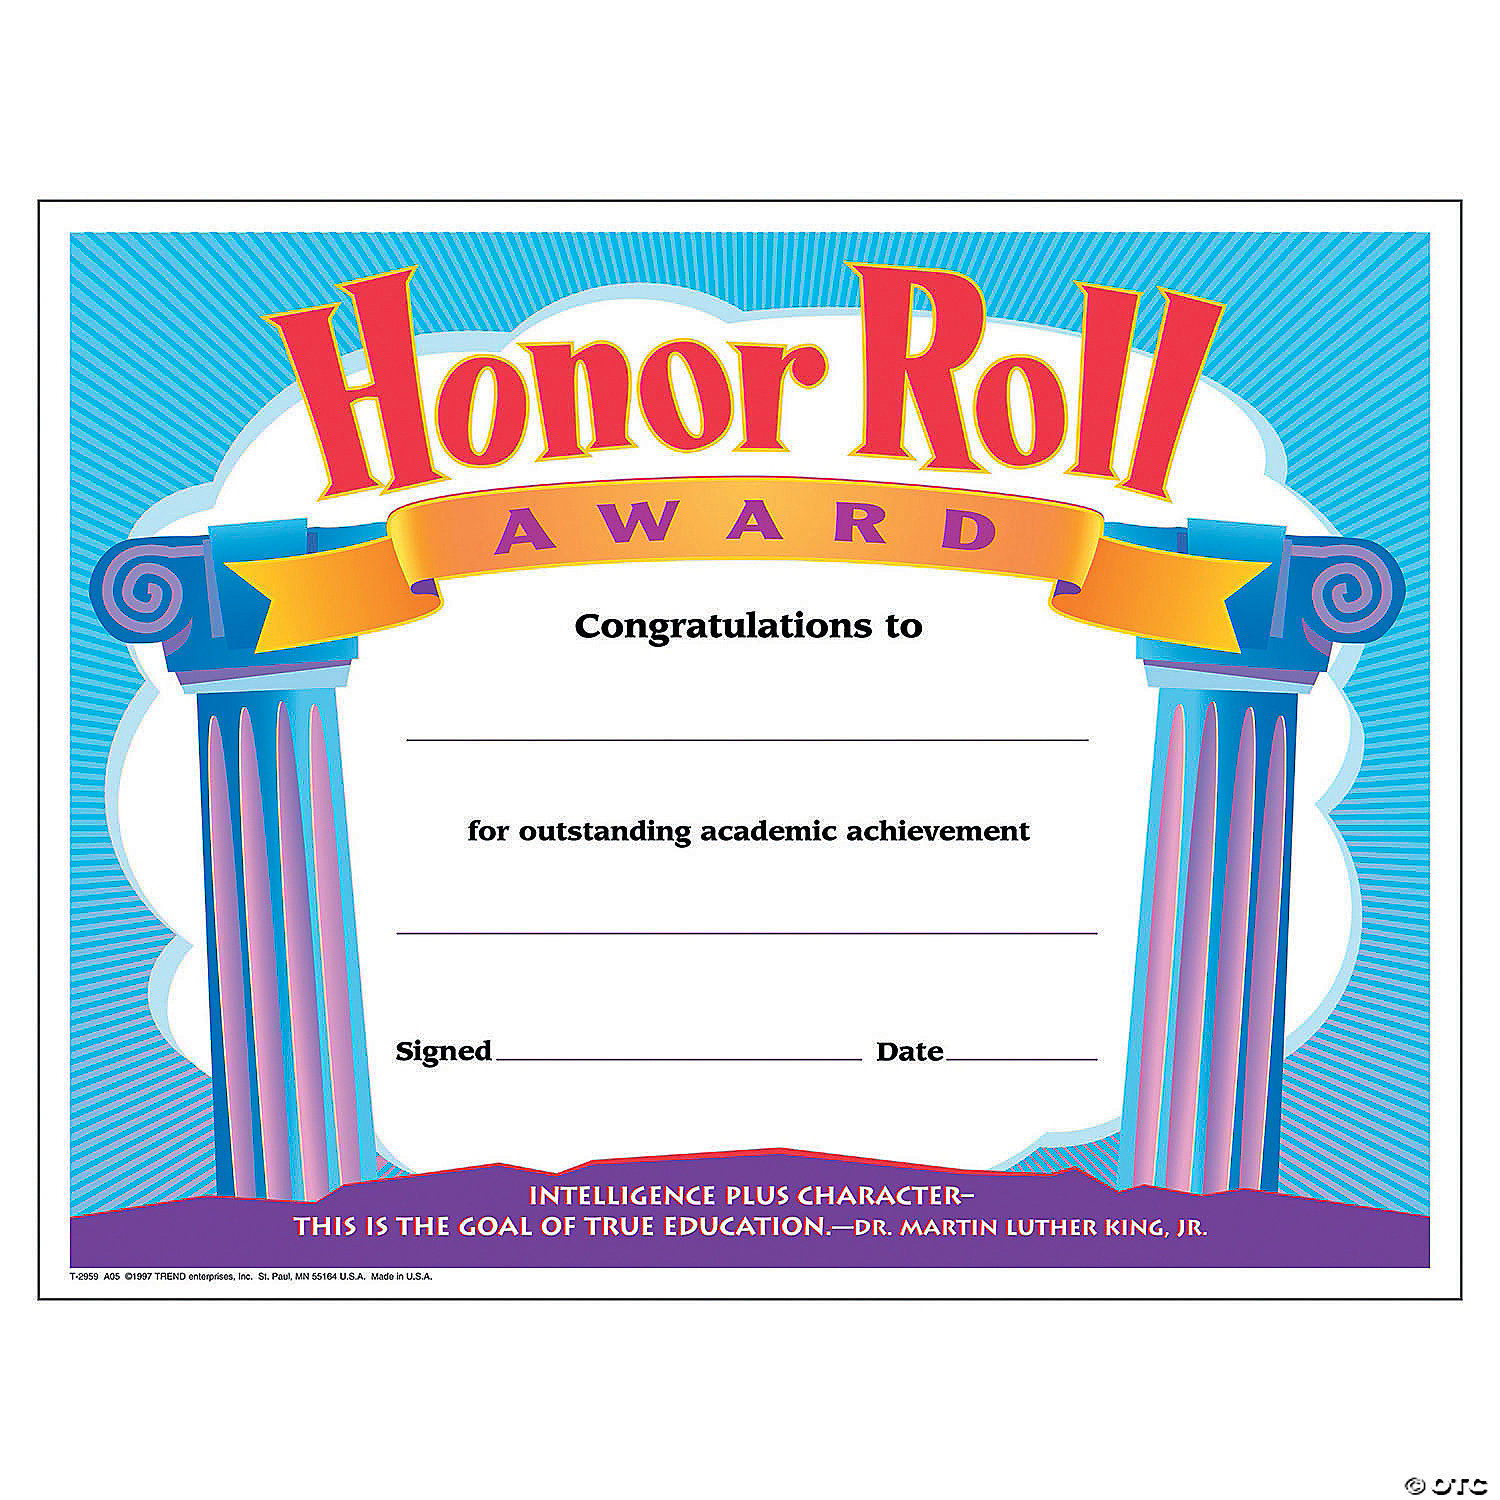 Honor Roll Award Certificate Oriental Trading